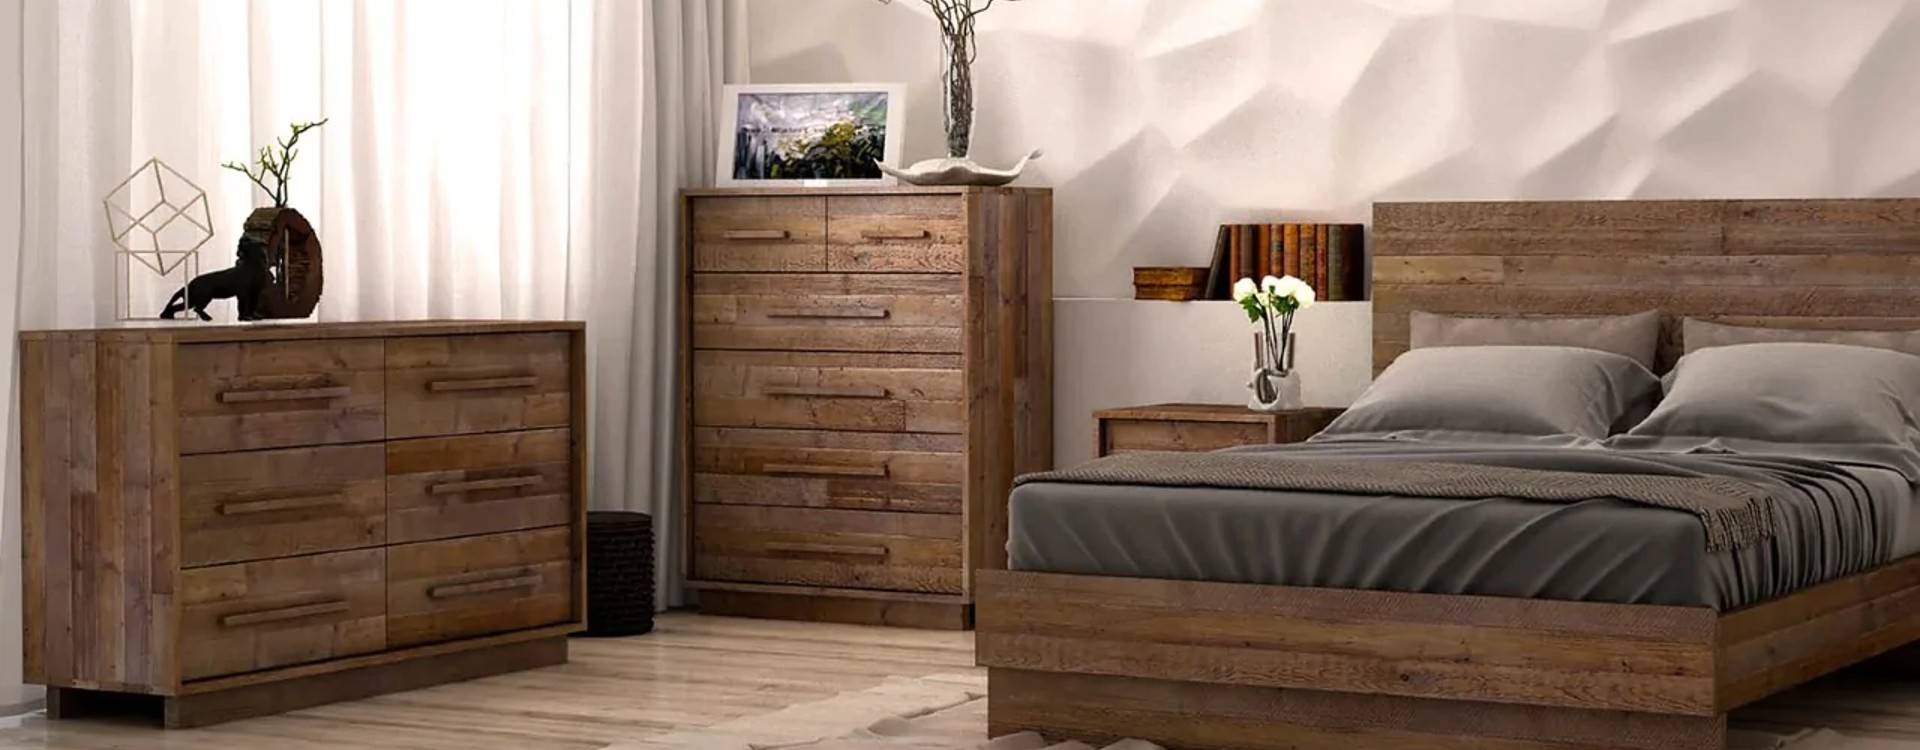 Calgary Dressers - Modern and elegant bedroom furniture in Calgary to enhance your sleep sanctuary